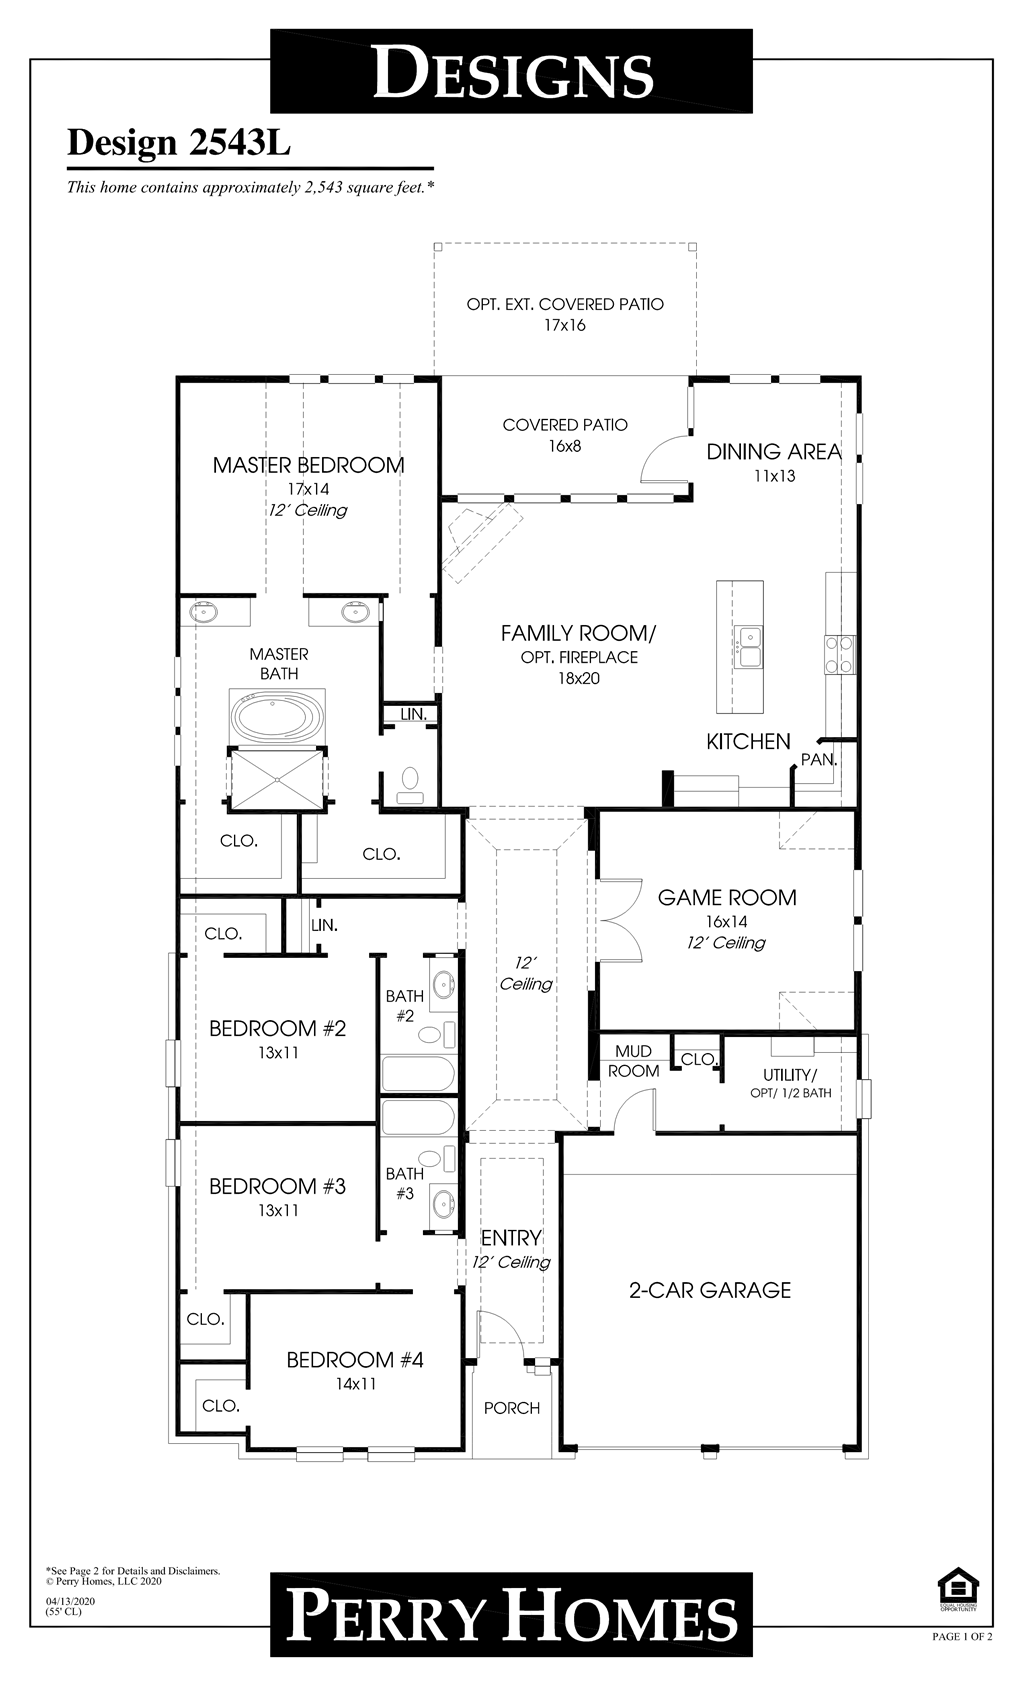 Floor Plan for 2543L